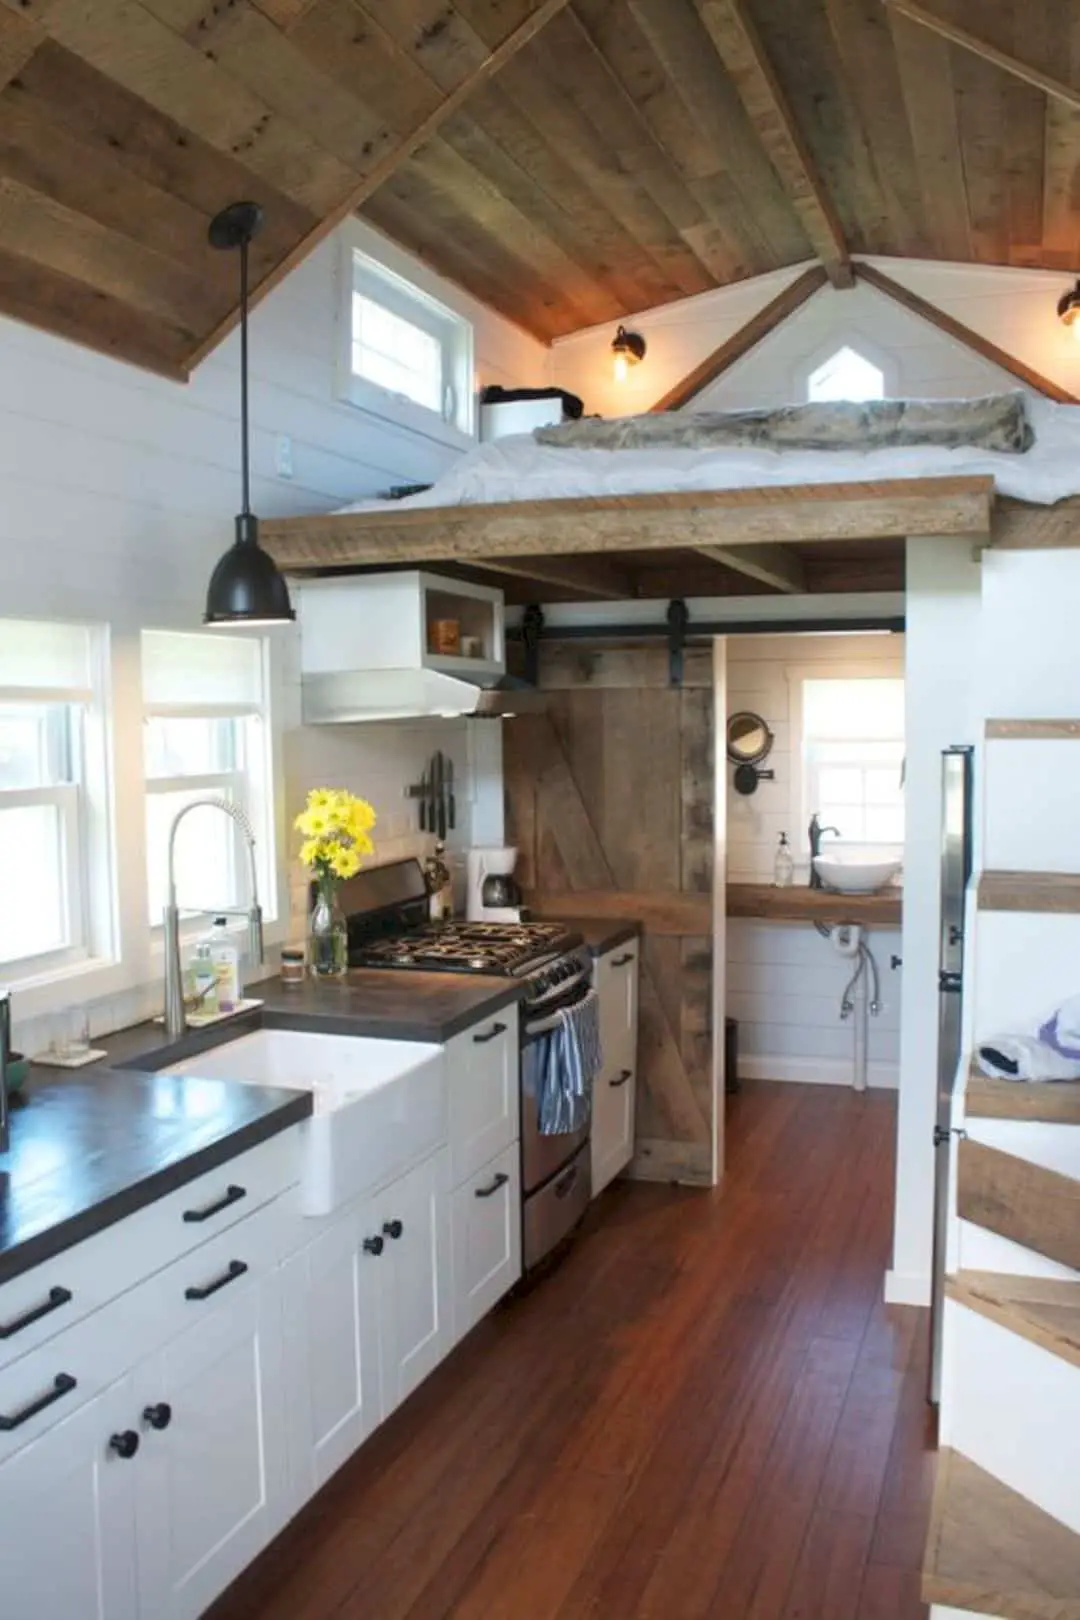 55 Farmhouse Interior Design Ideas for Tiny House - Talkdecor